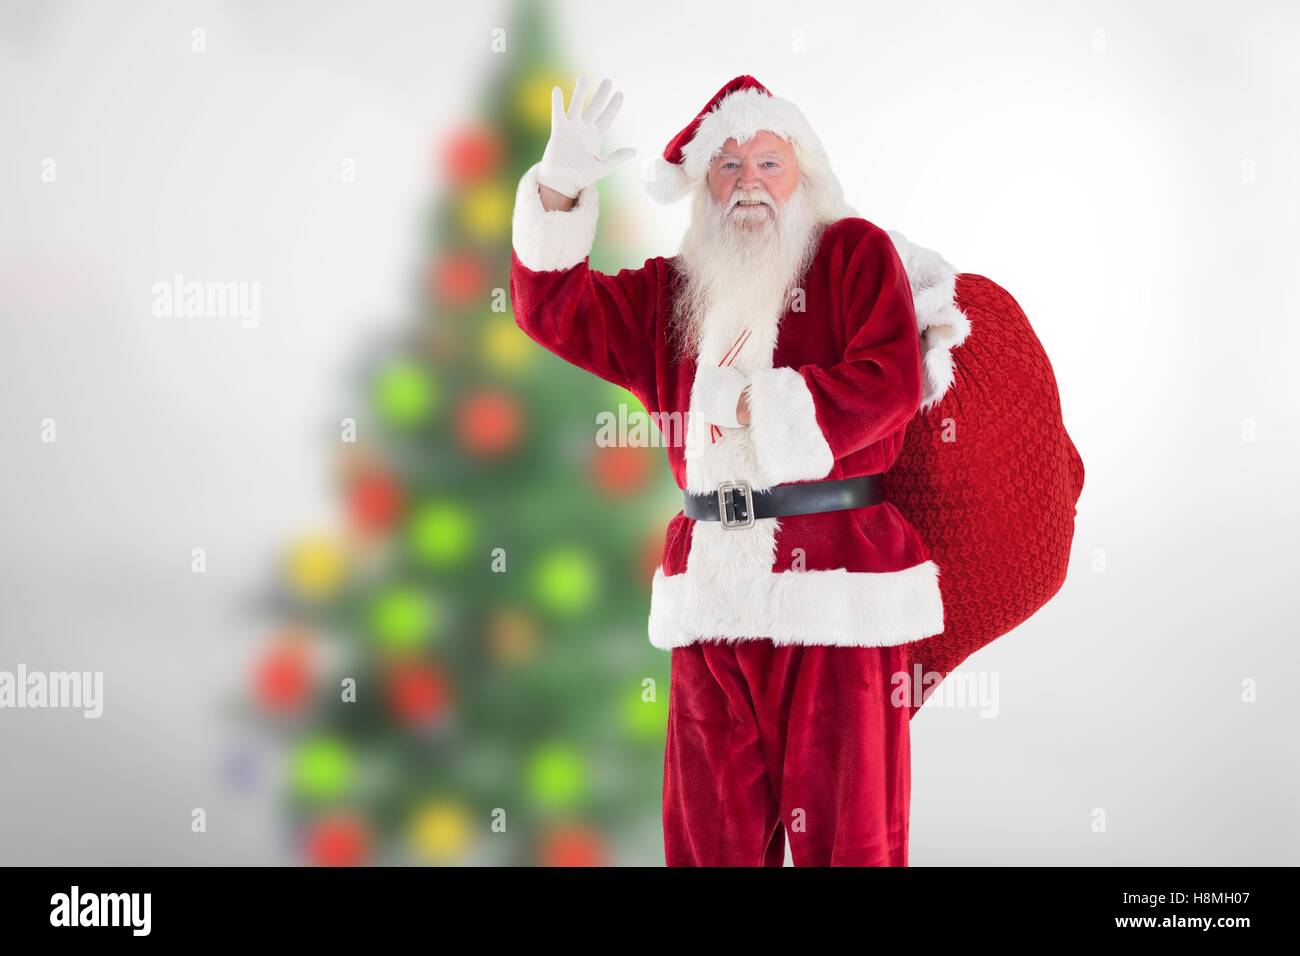 Santa claus waving his hand during christmas time Stock Photo